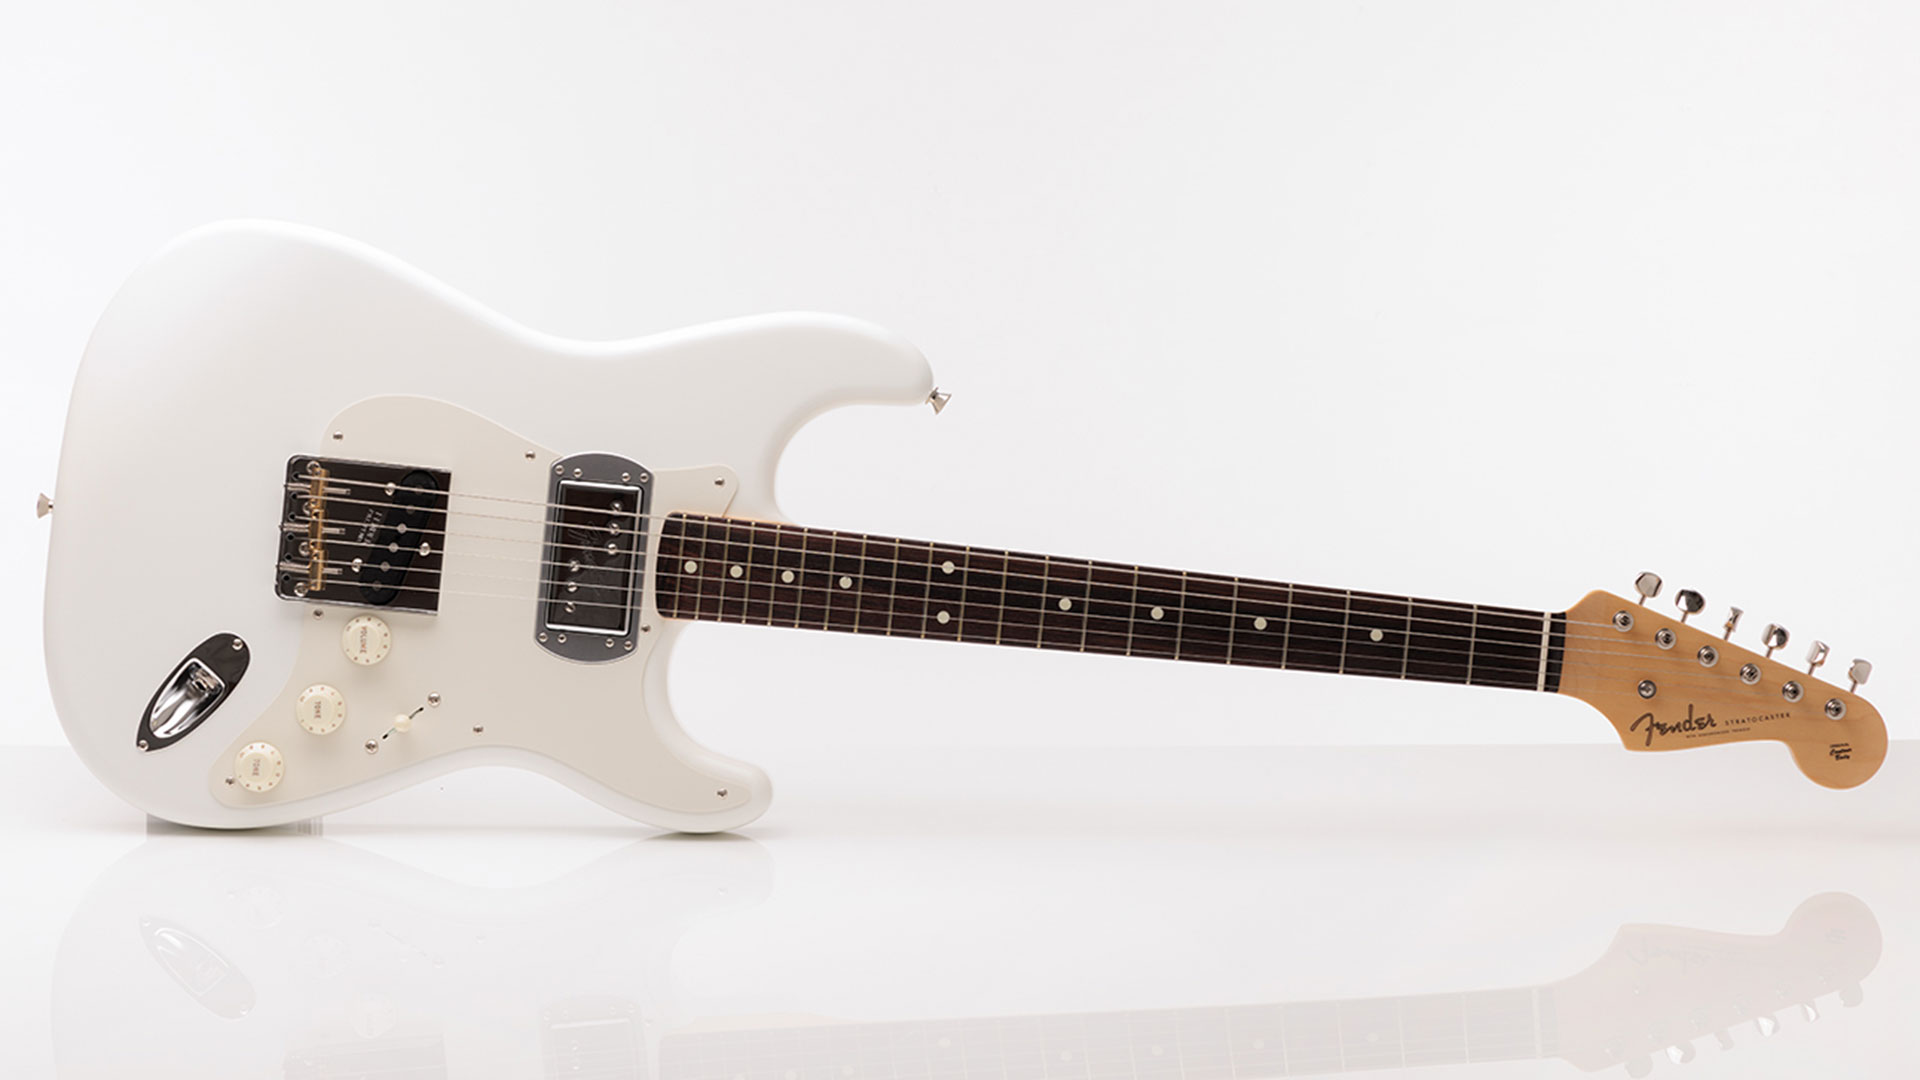 Meet the Stratocaster Custom, a Fender Japan signature model that 